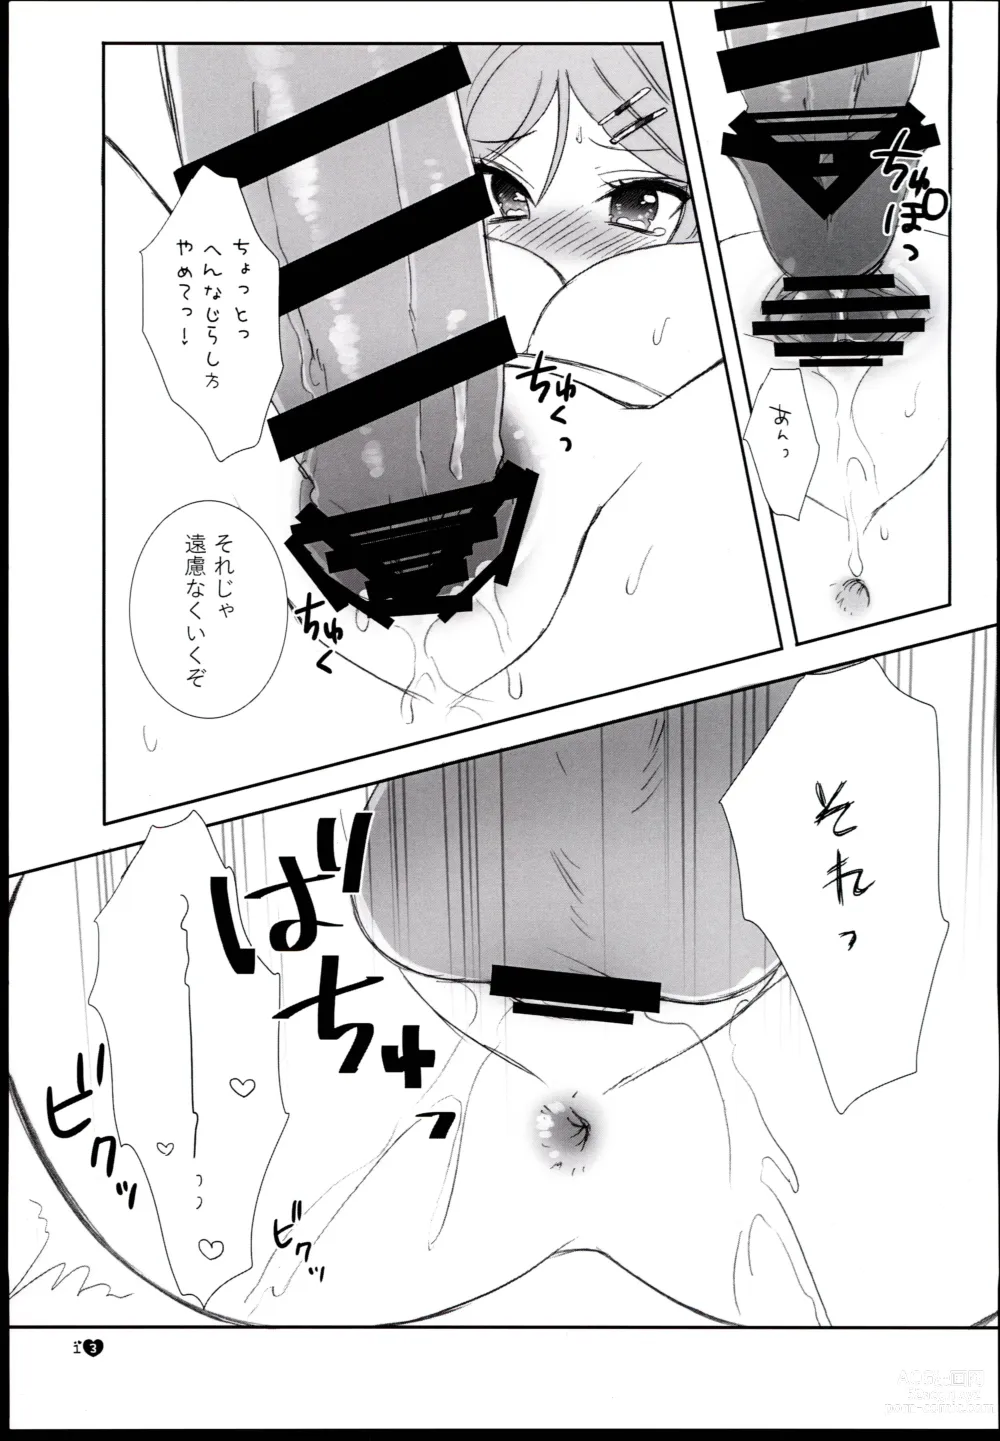 Page 15 of doujinshi Shooting Star